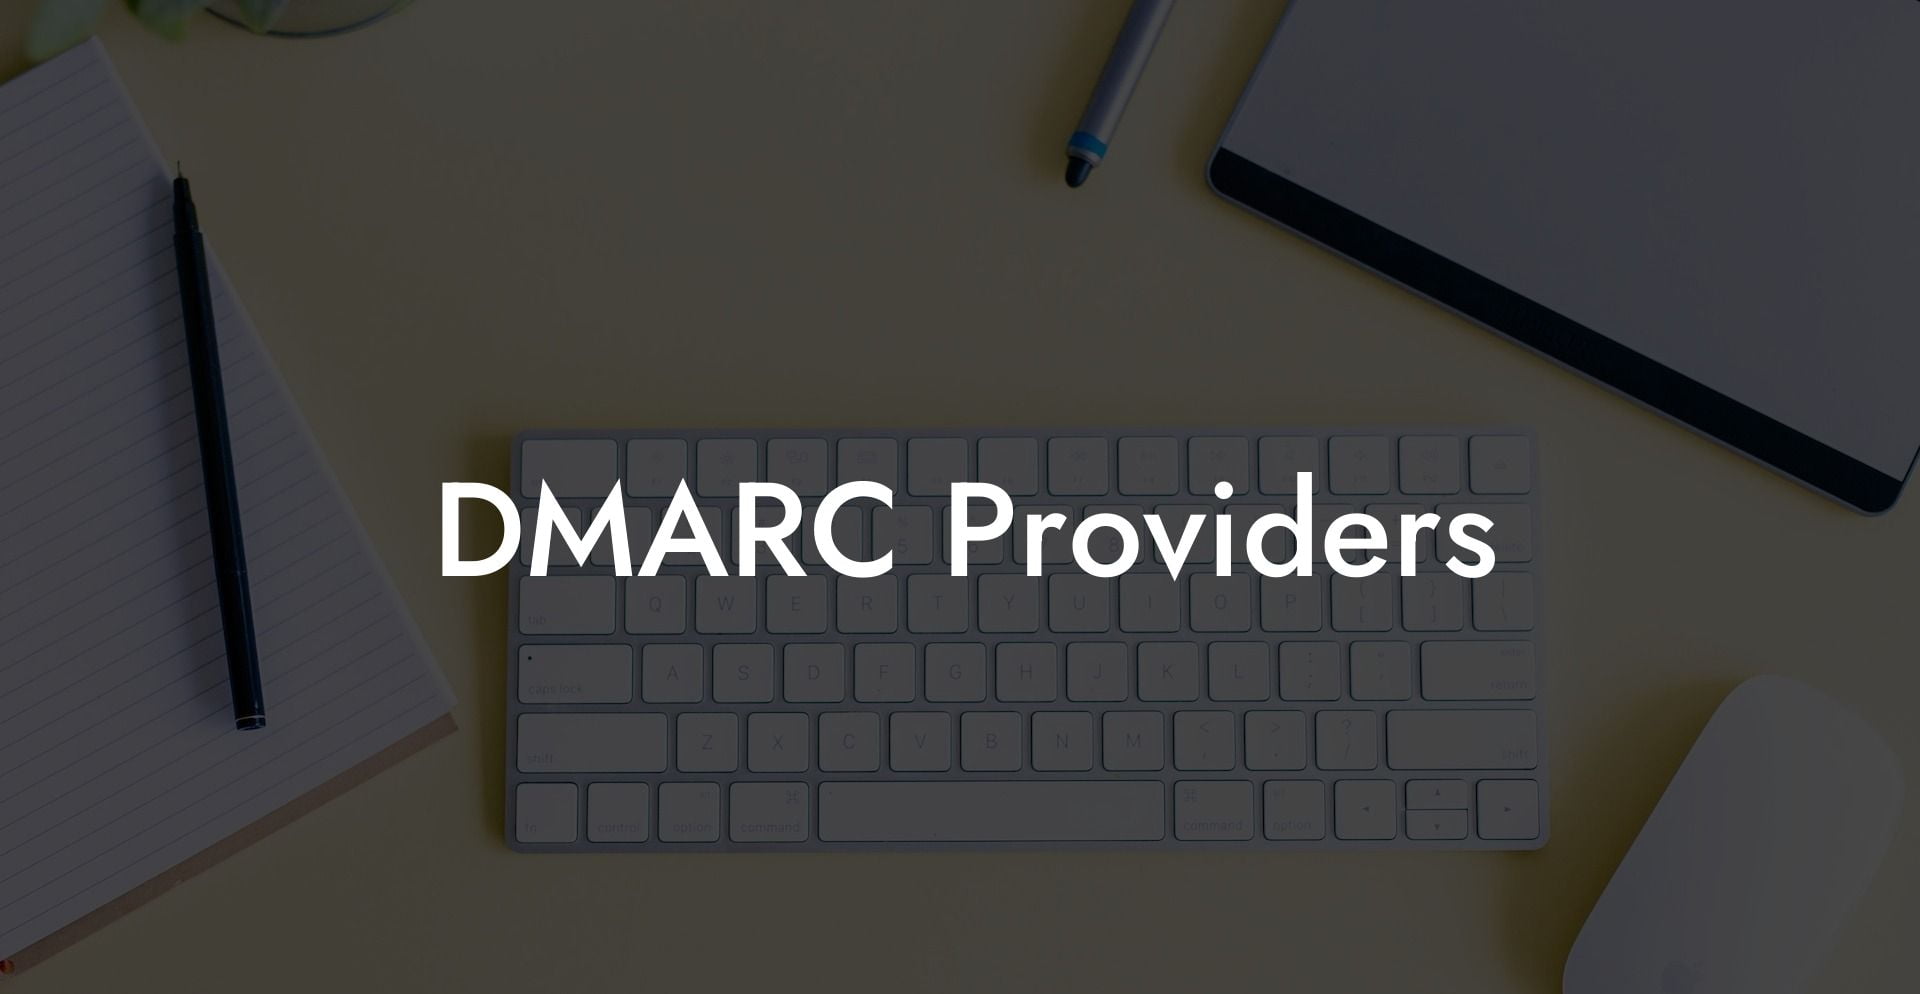 DMARC Providers